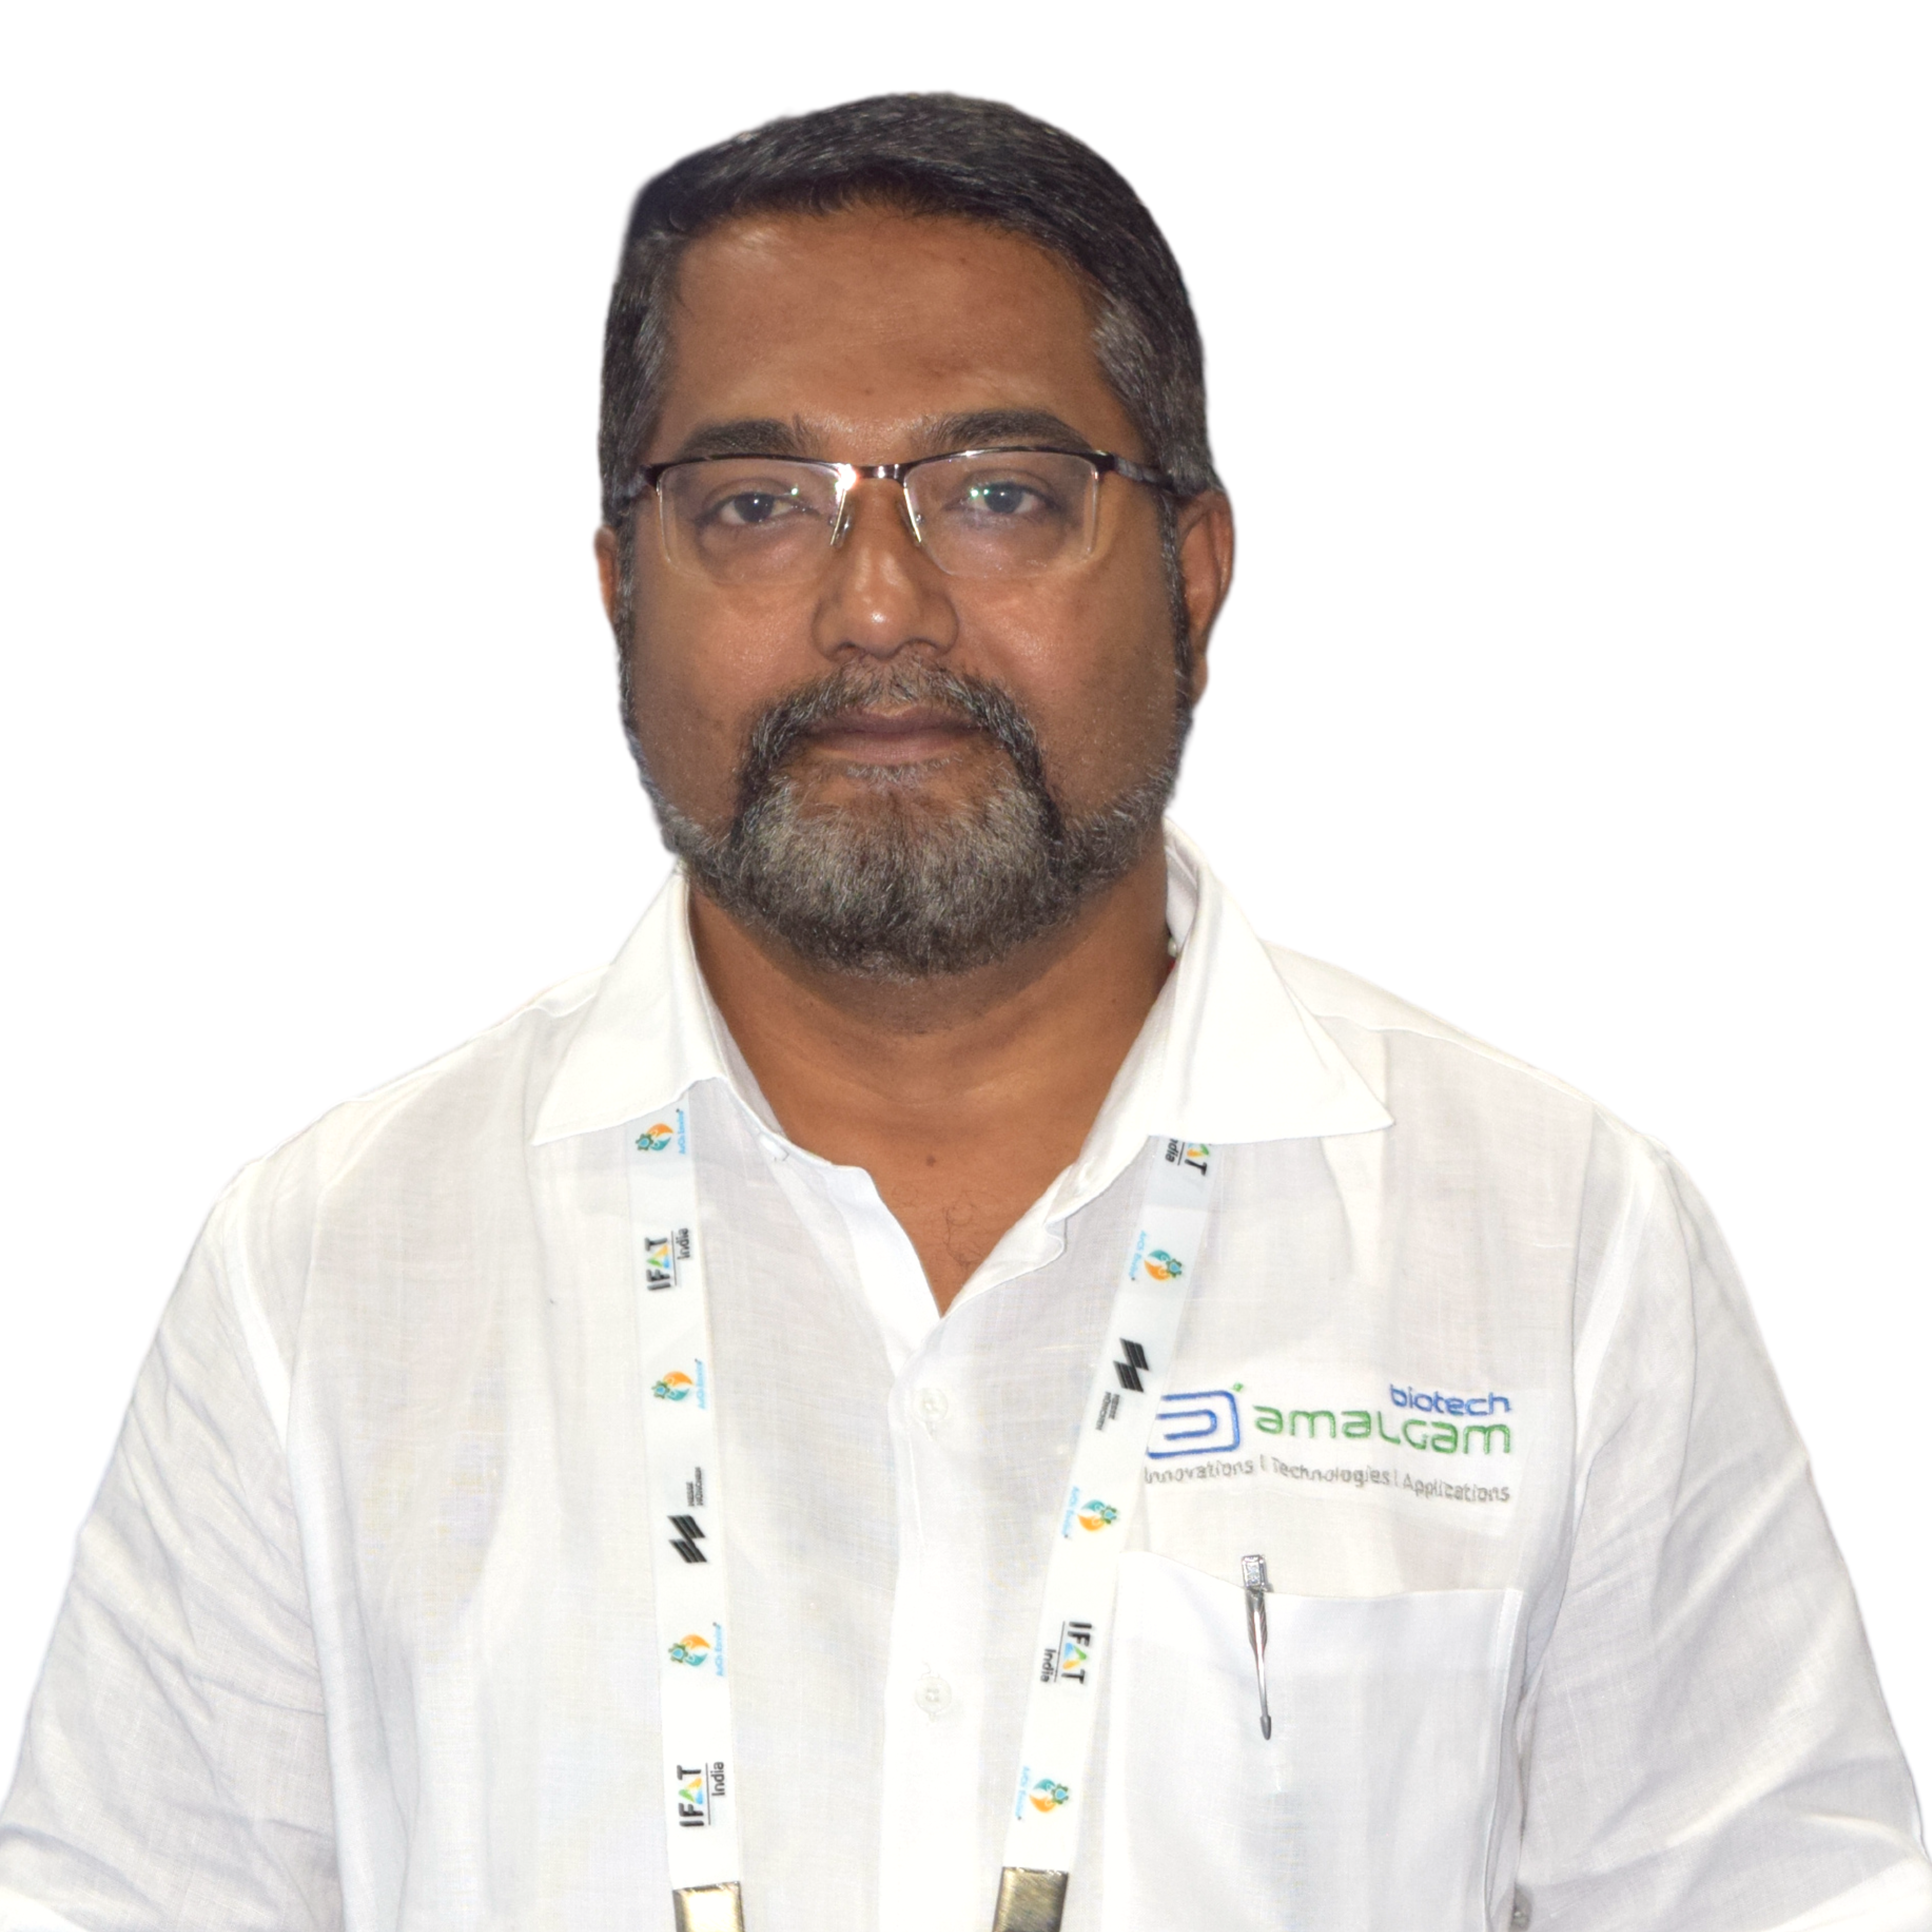 Ashutosh Vadangekar, Technical Director at Amalgam Biotech